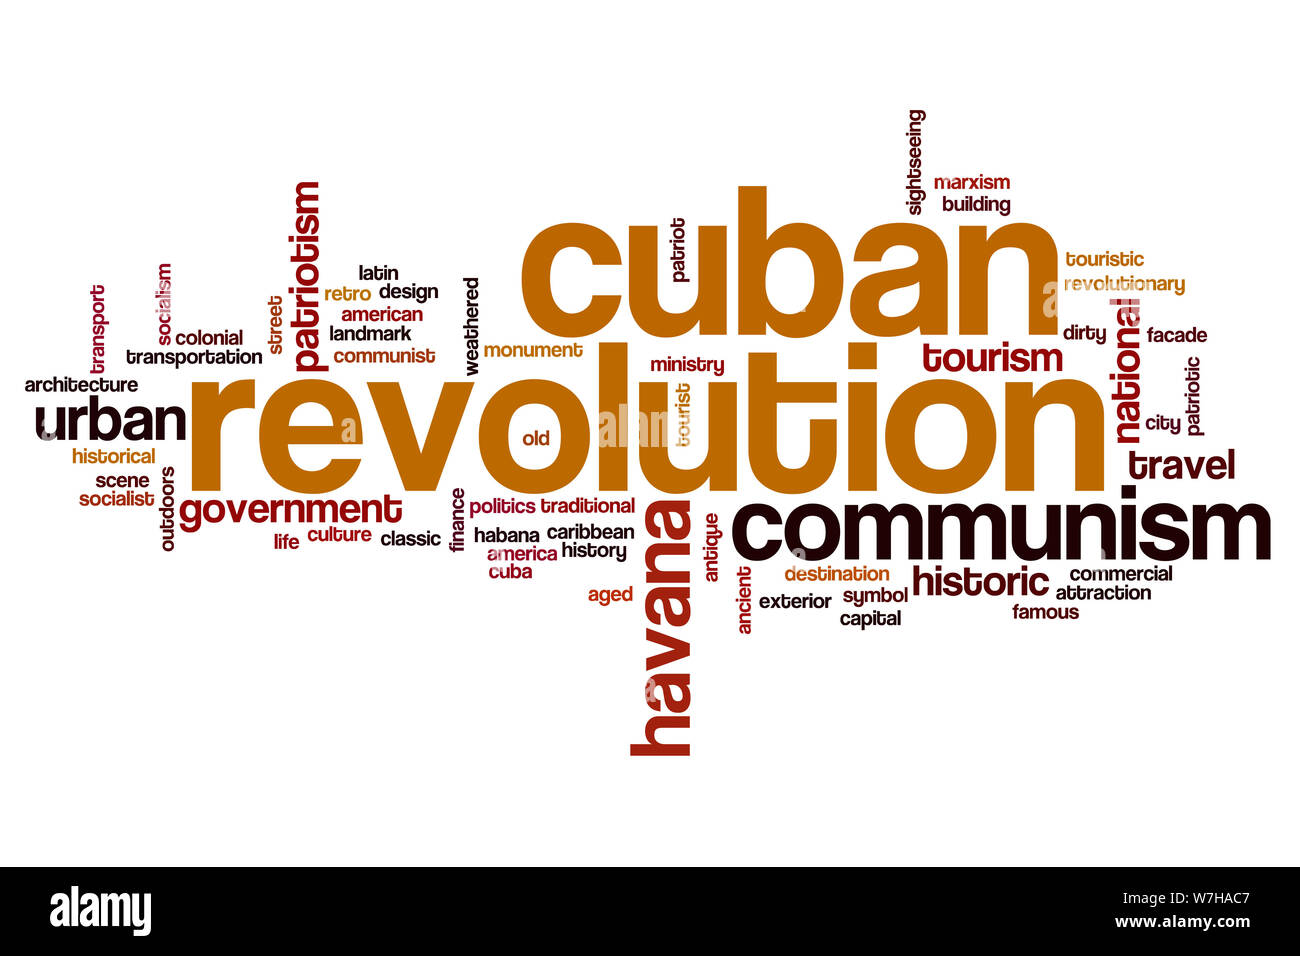 Cuban revolution word cloud concept Stock Photo